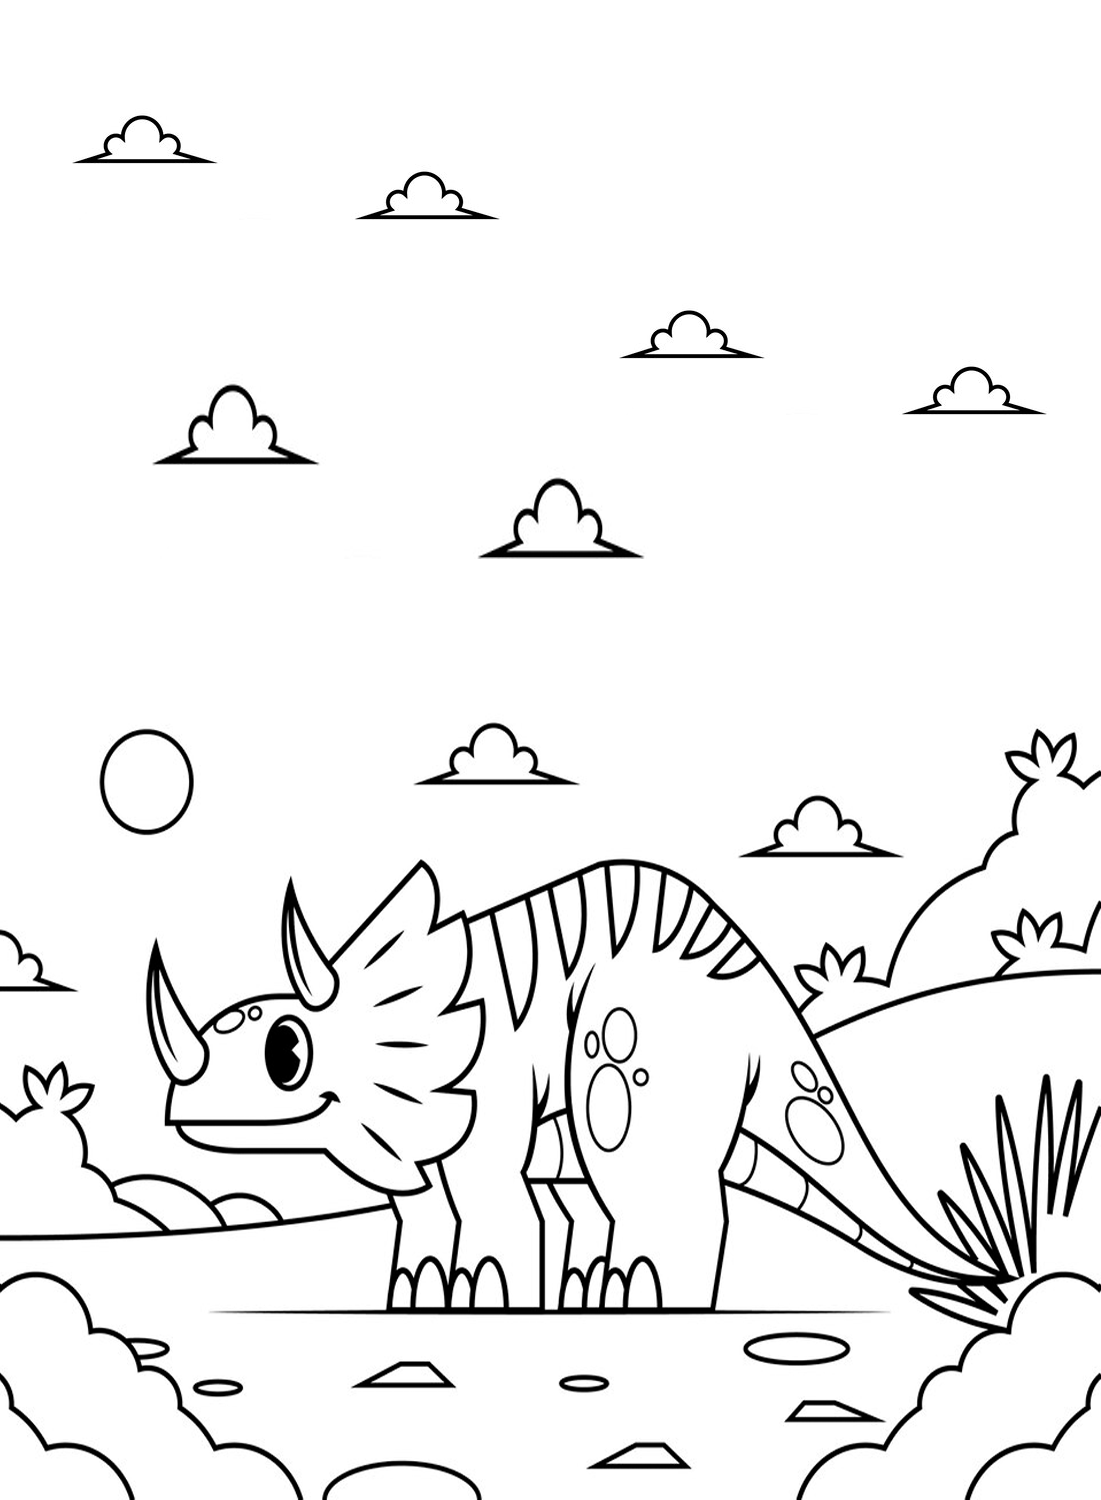 Dibujos para colorear de dinosaurios triceratops